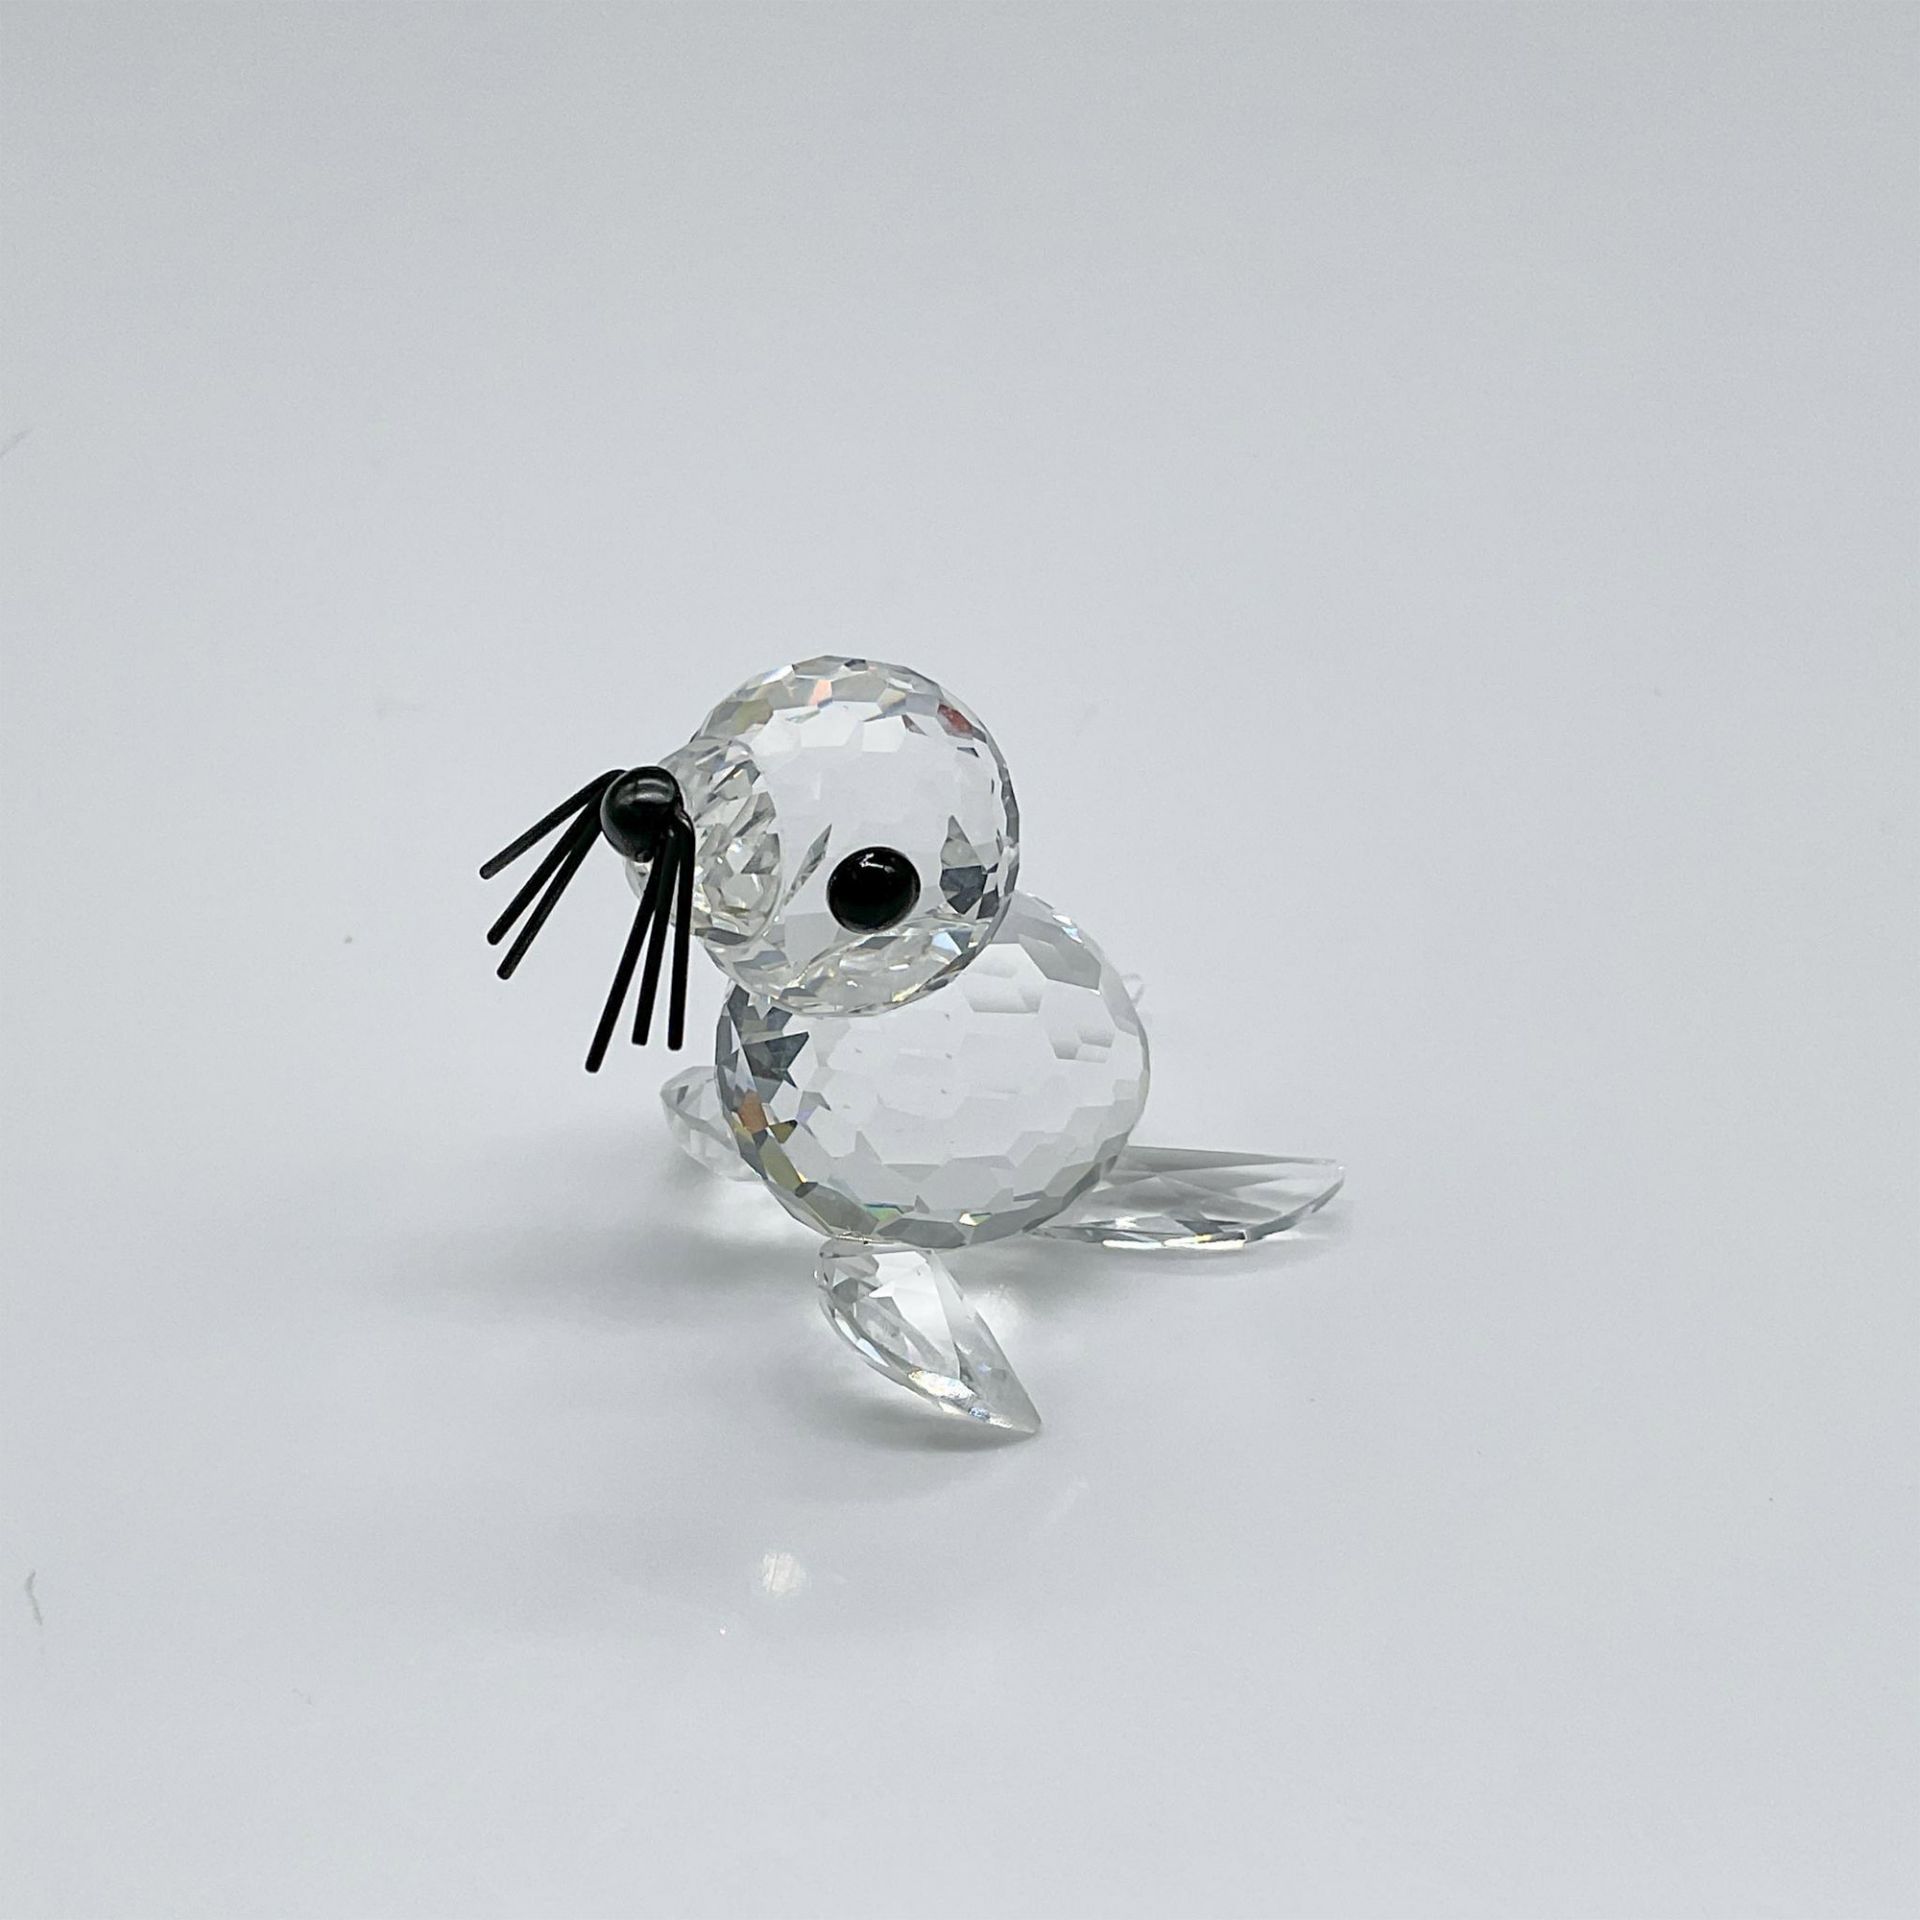 Swarovski Silver Crystal Figurine Baby Seal w/Black Whiskers - Image 2 of 4